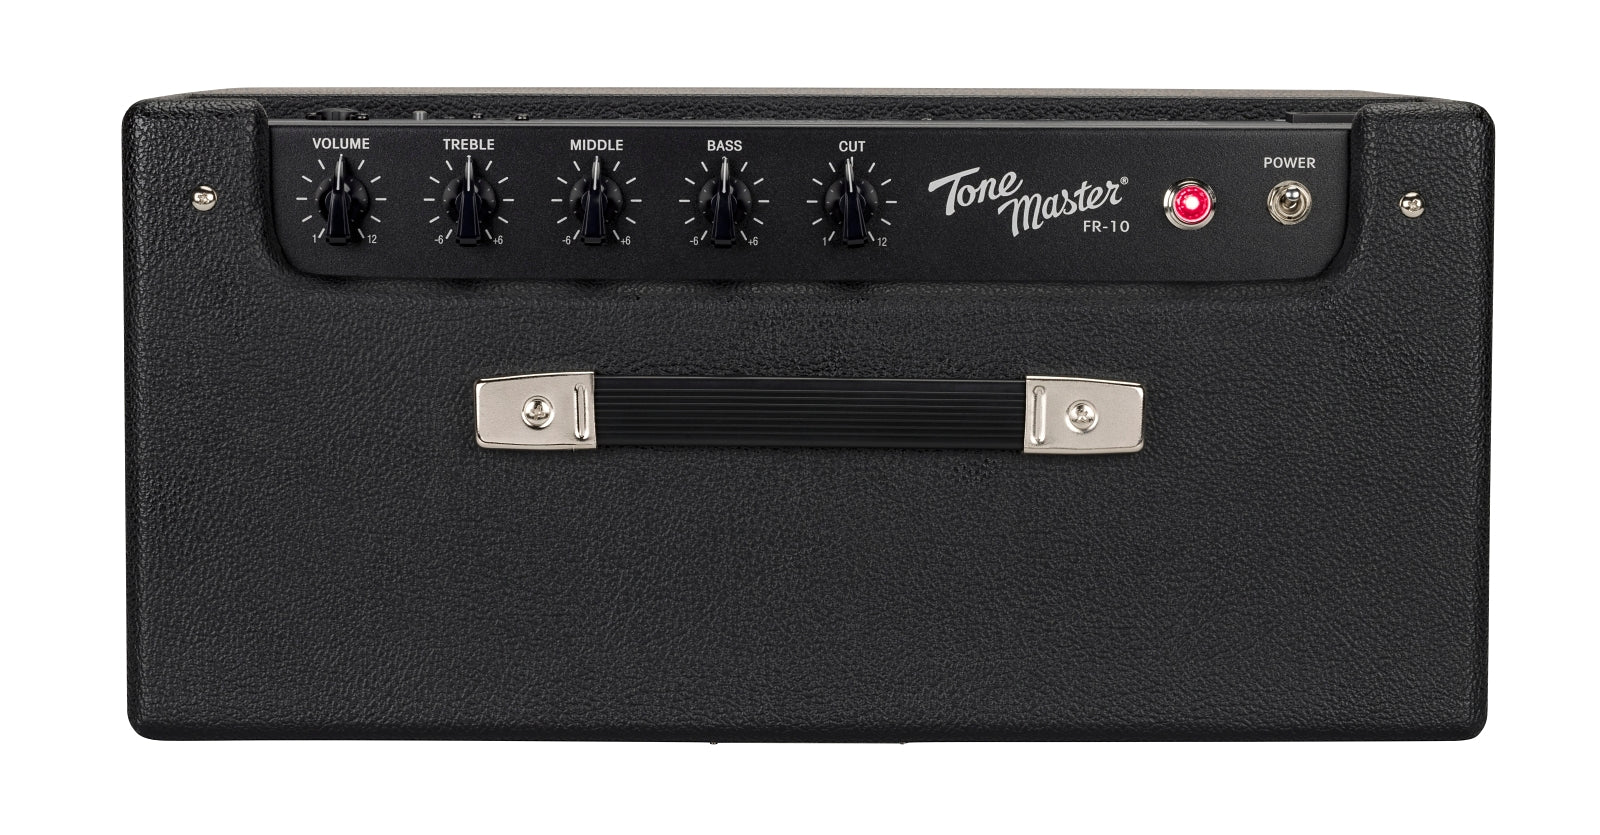 Fender Tone Master FR-10 1,000W 1 X 10" Powered Guitar Cabinet